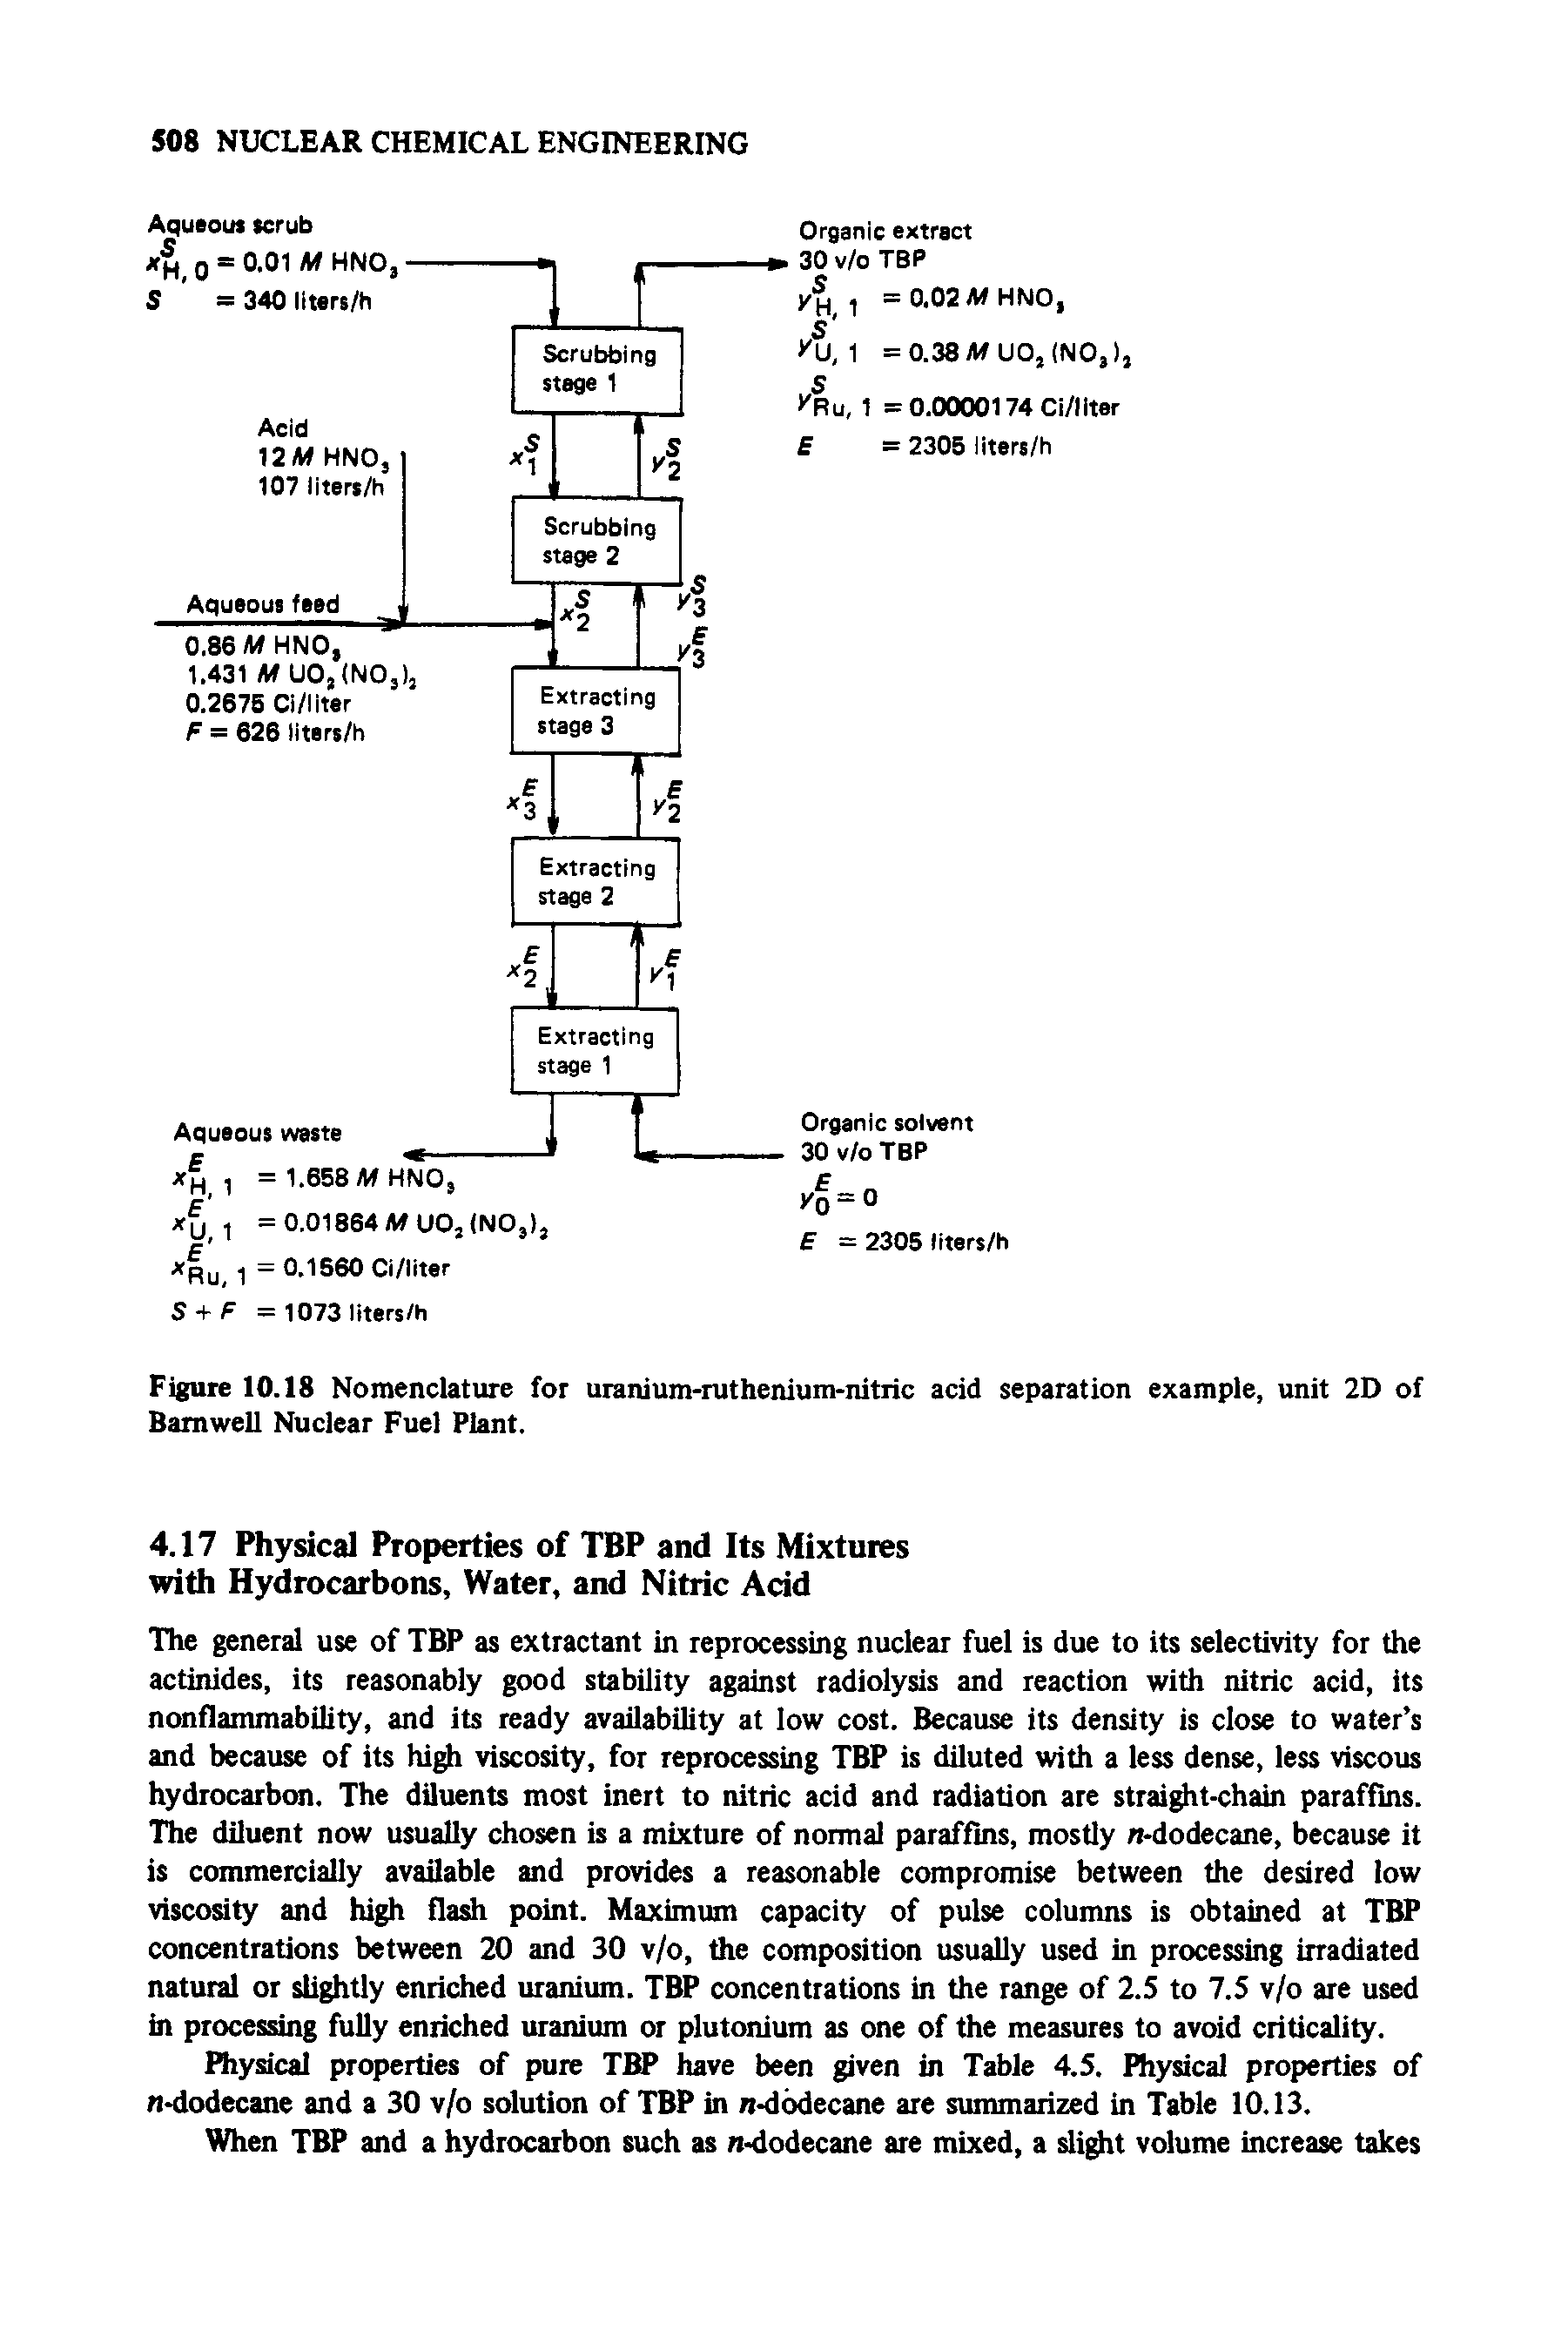 Figure 10.18 Nomenclature for uranium-nithenium-nitric acid separation example, unit 2D of Barnwell Nuclear Fuel Plant.